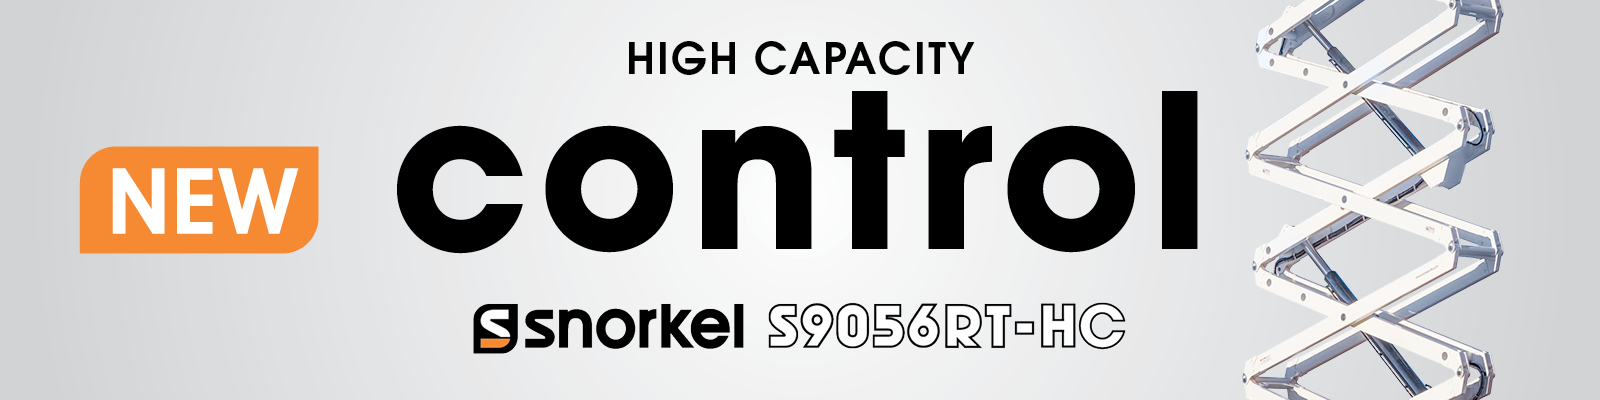 High Capacity Control Snorkel S9056RT-HC rough terrain scissor lift